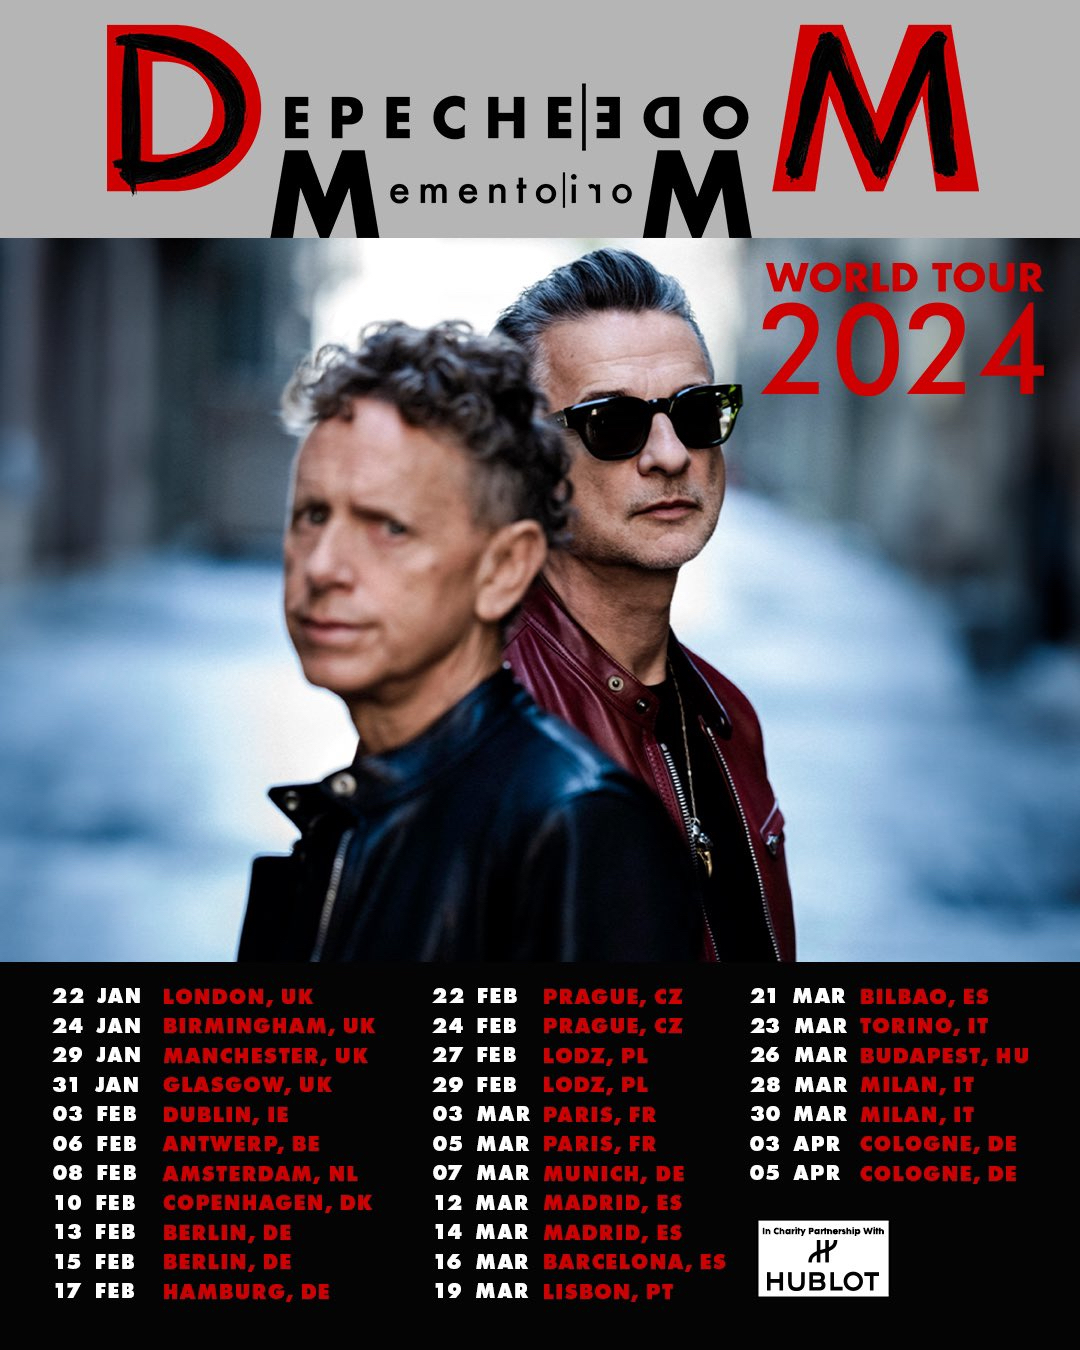 Depeche Mode - Memento Mori World Tour 2023 